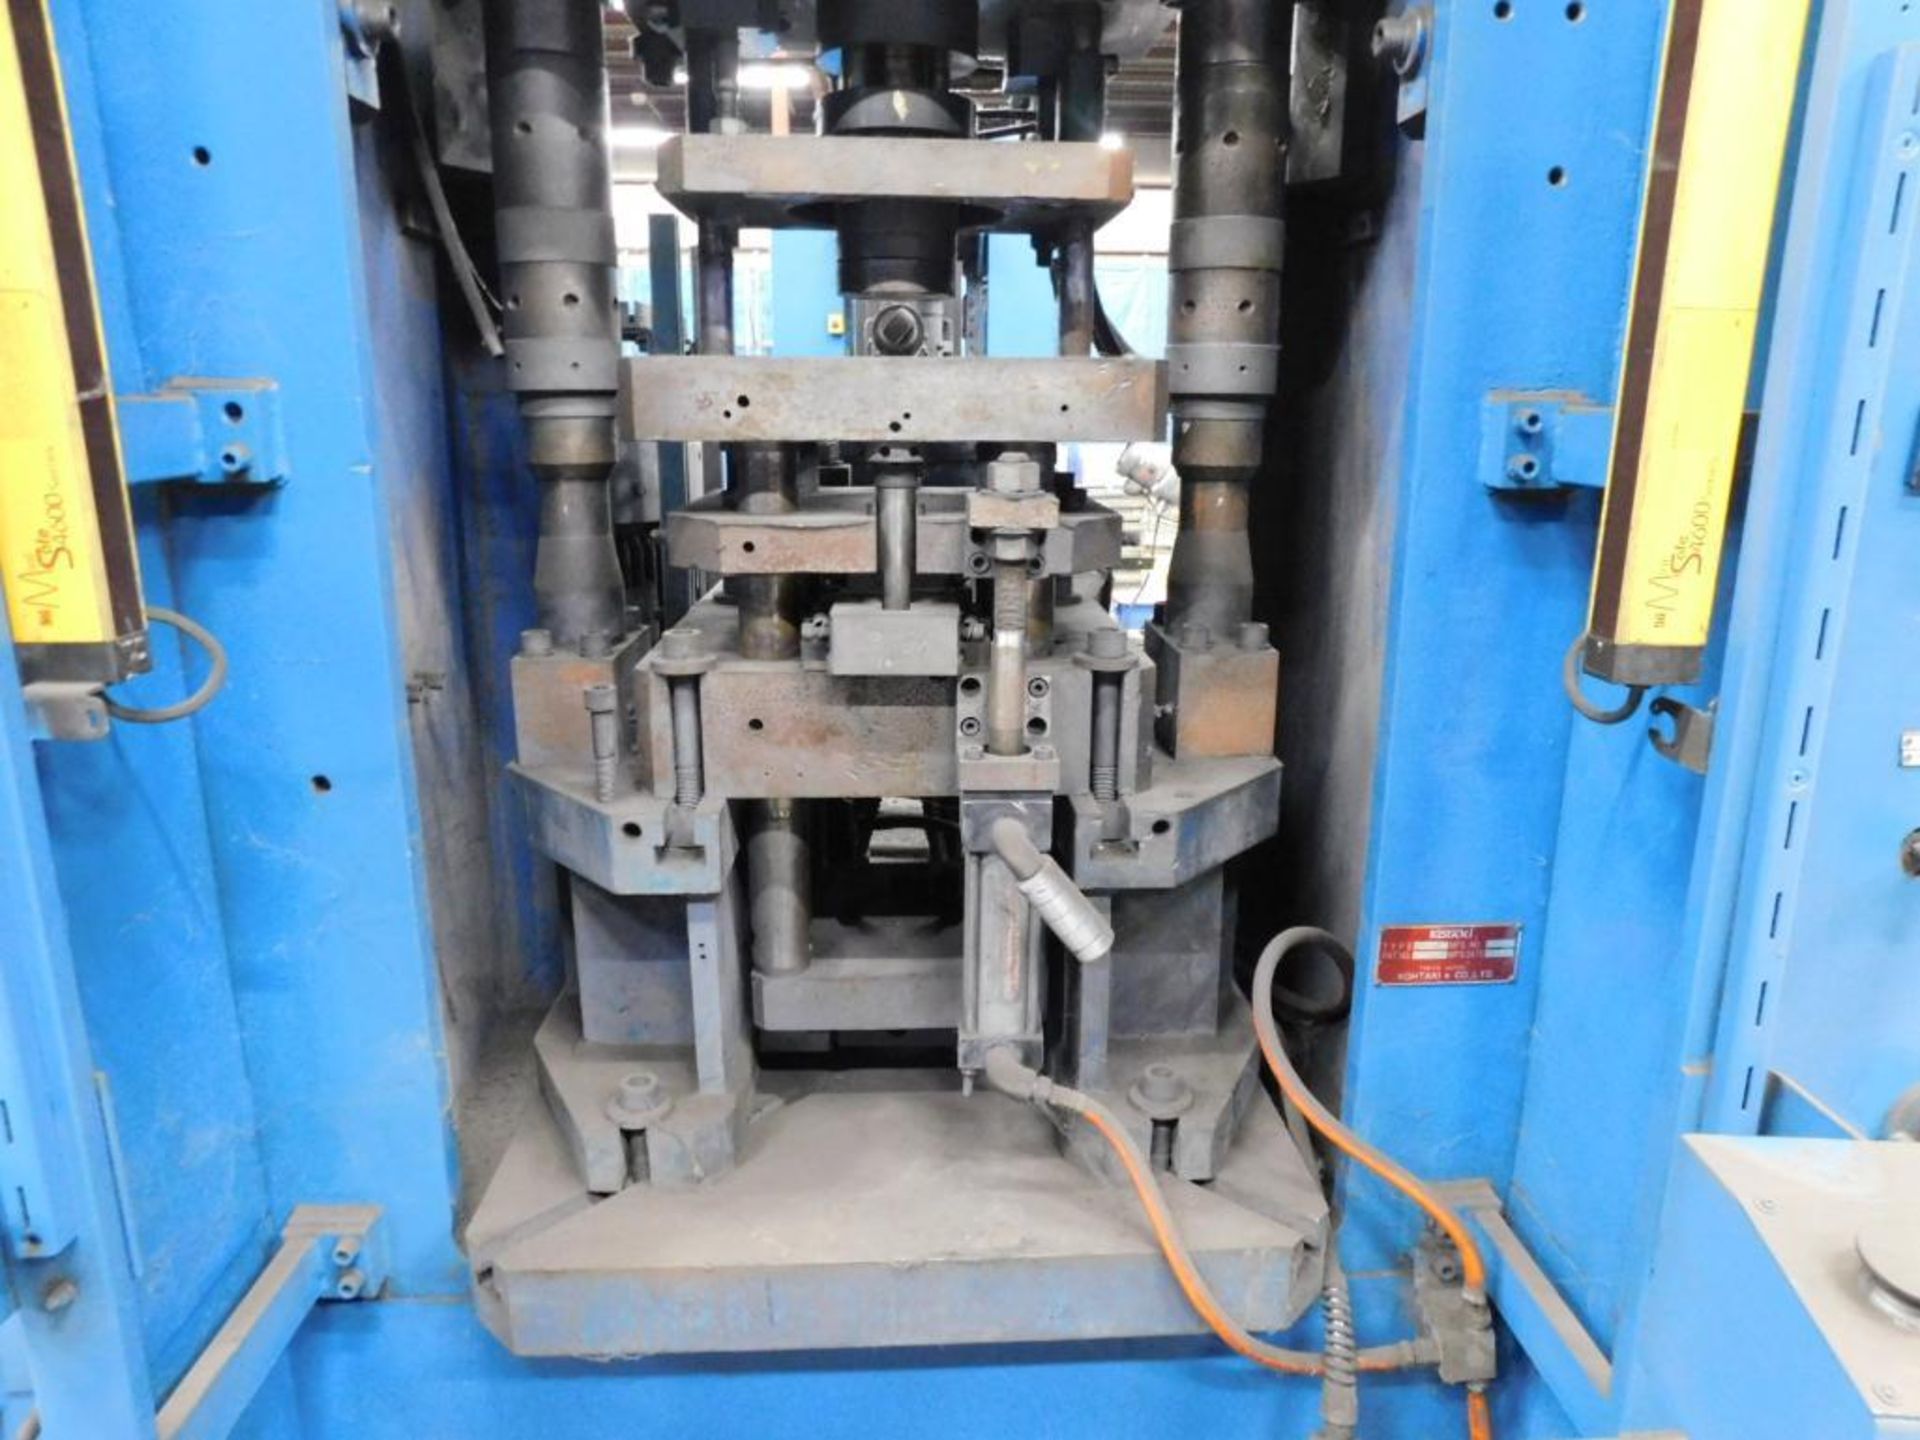 Kotaki Powder Compacting Press, Hydraulic, Model KPH-100, S/N: 2123, 100 Ton Maximum Pressing Force, - Image 11 of 27